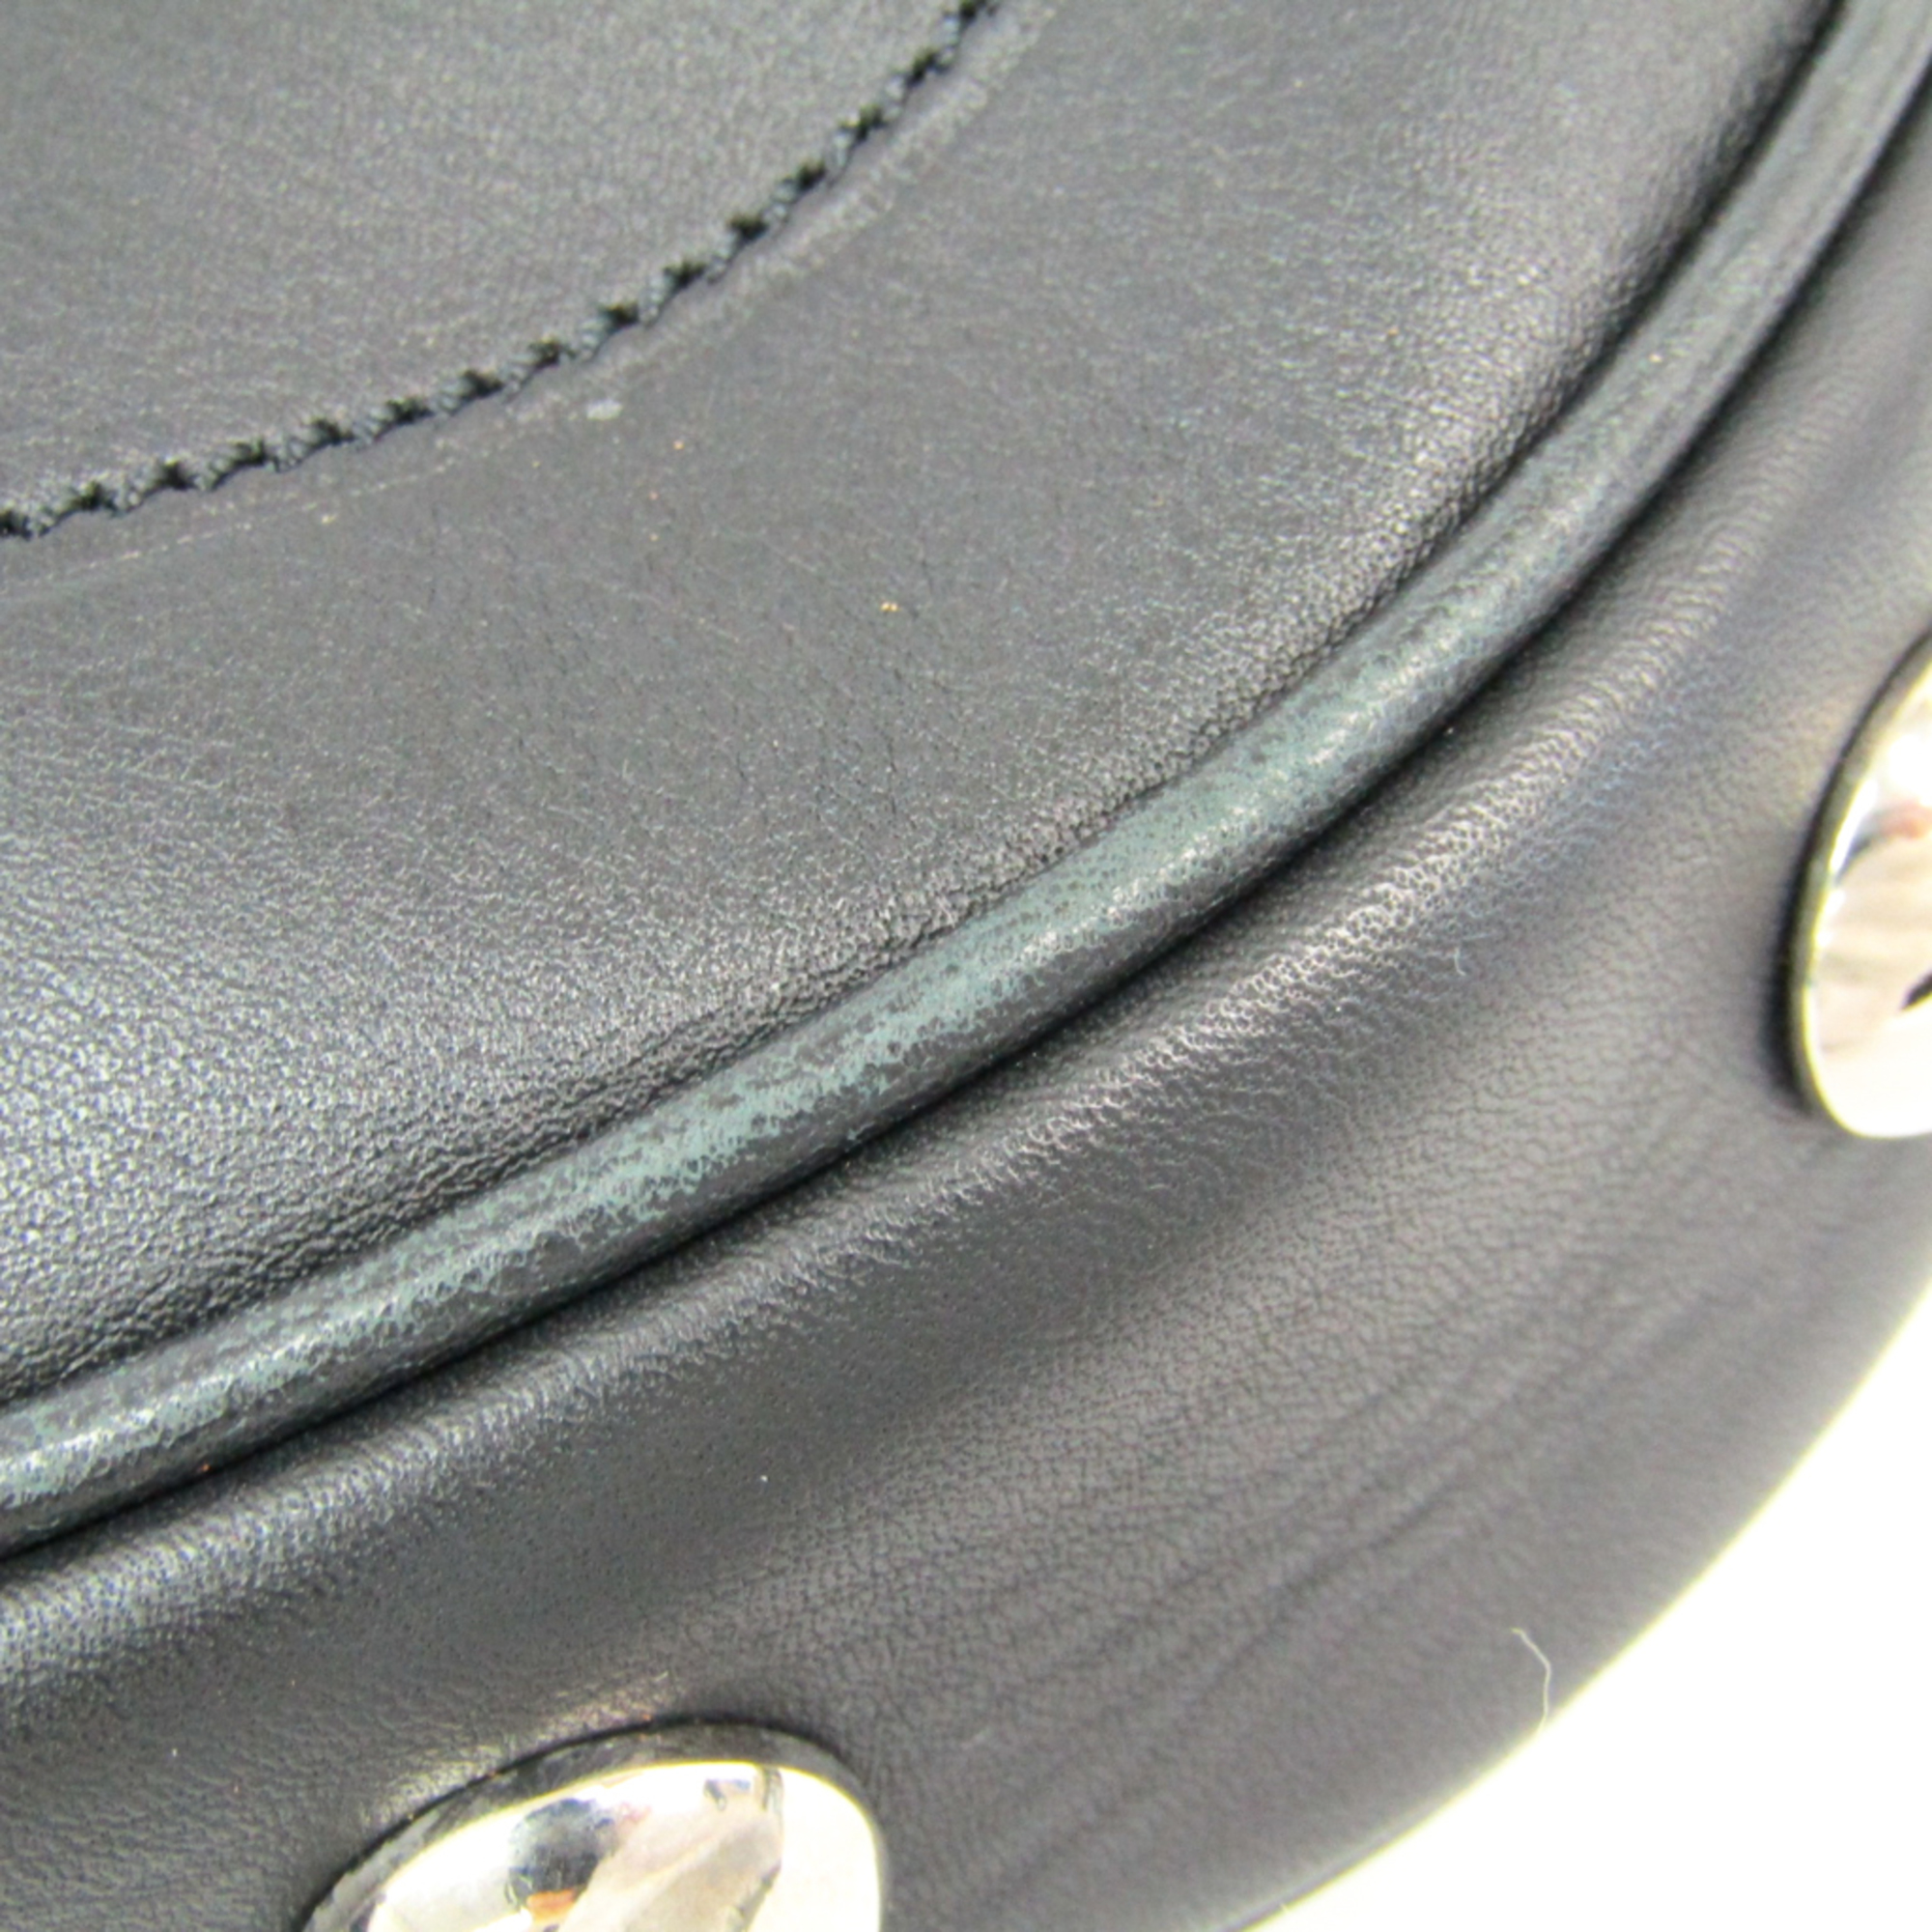 Bally COROZAR Women's Leather Shoulder Bag Black